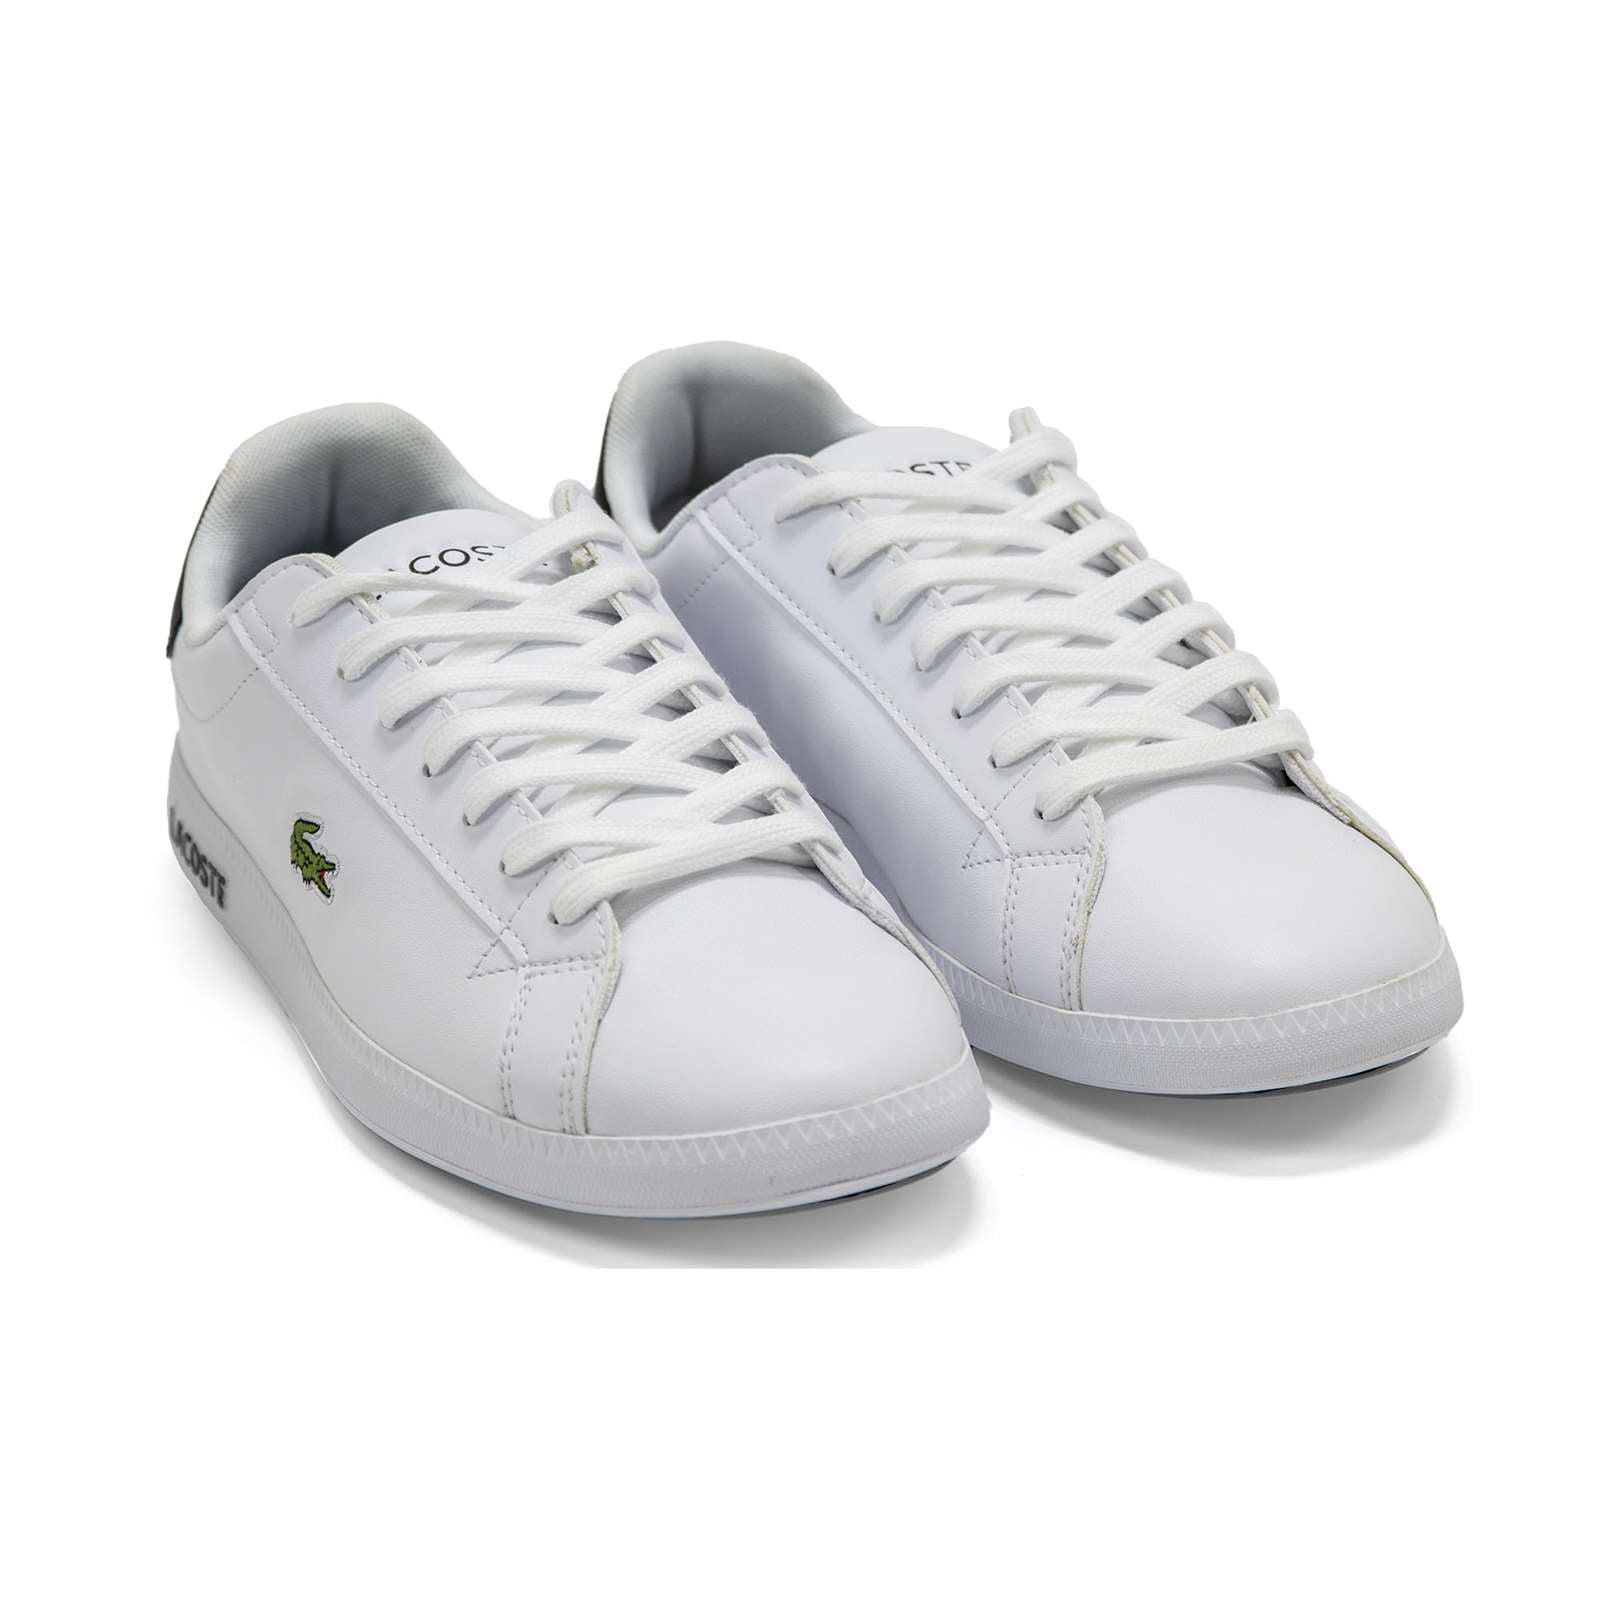 Lacoste Graduate Sneaker 7 White/Black - Walmart.com